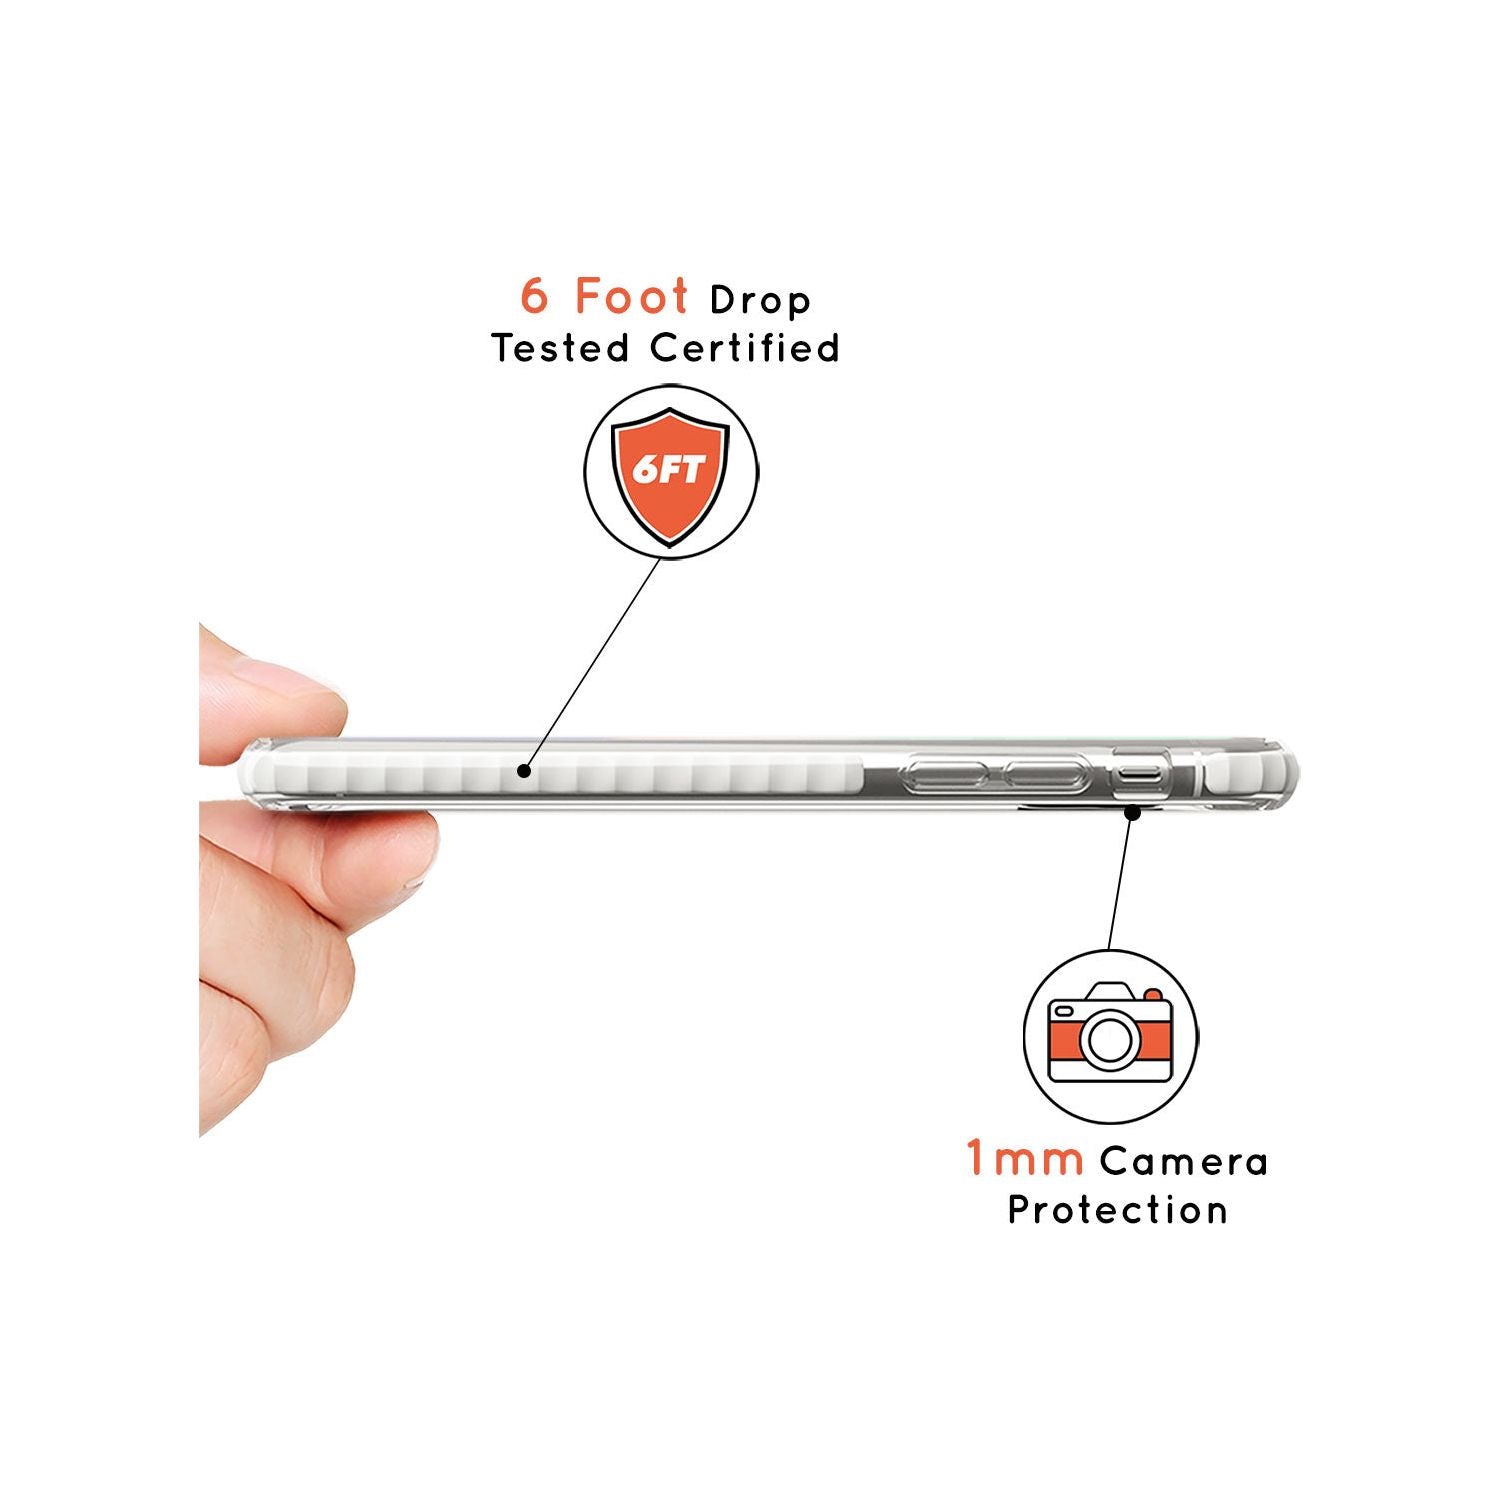 Strength Tarot Card - Transparent Slim TPU Phone Case for iPhone SE 8 7 Plus